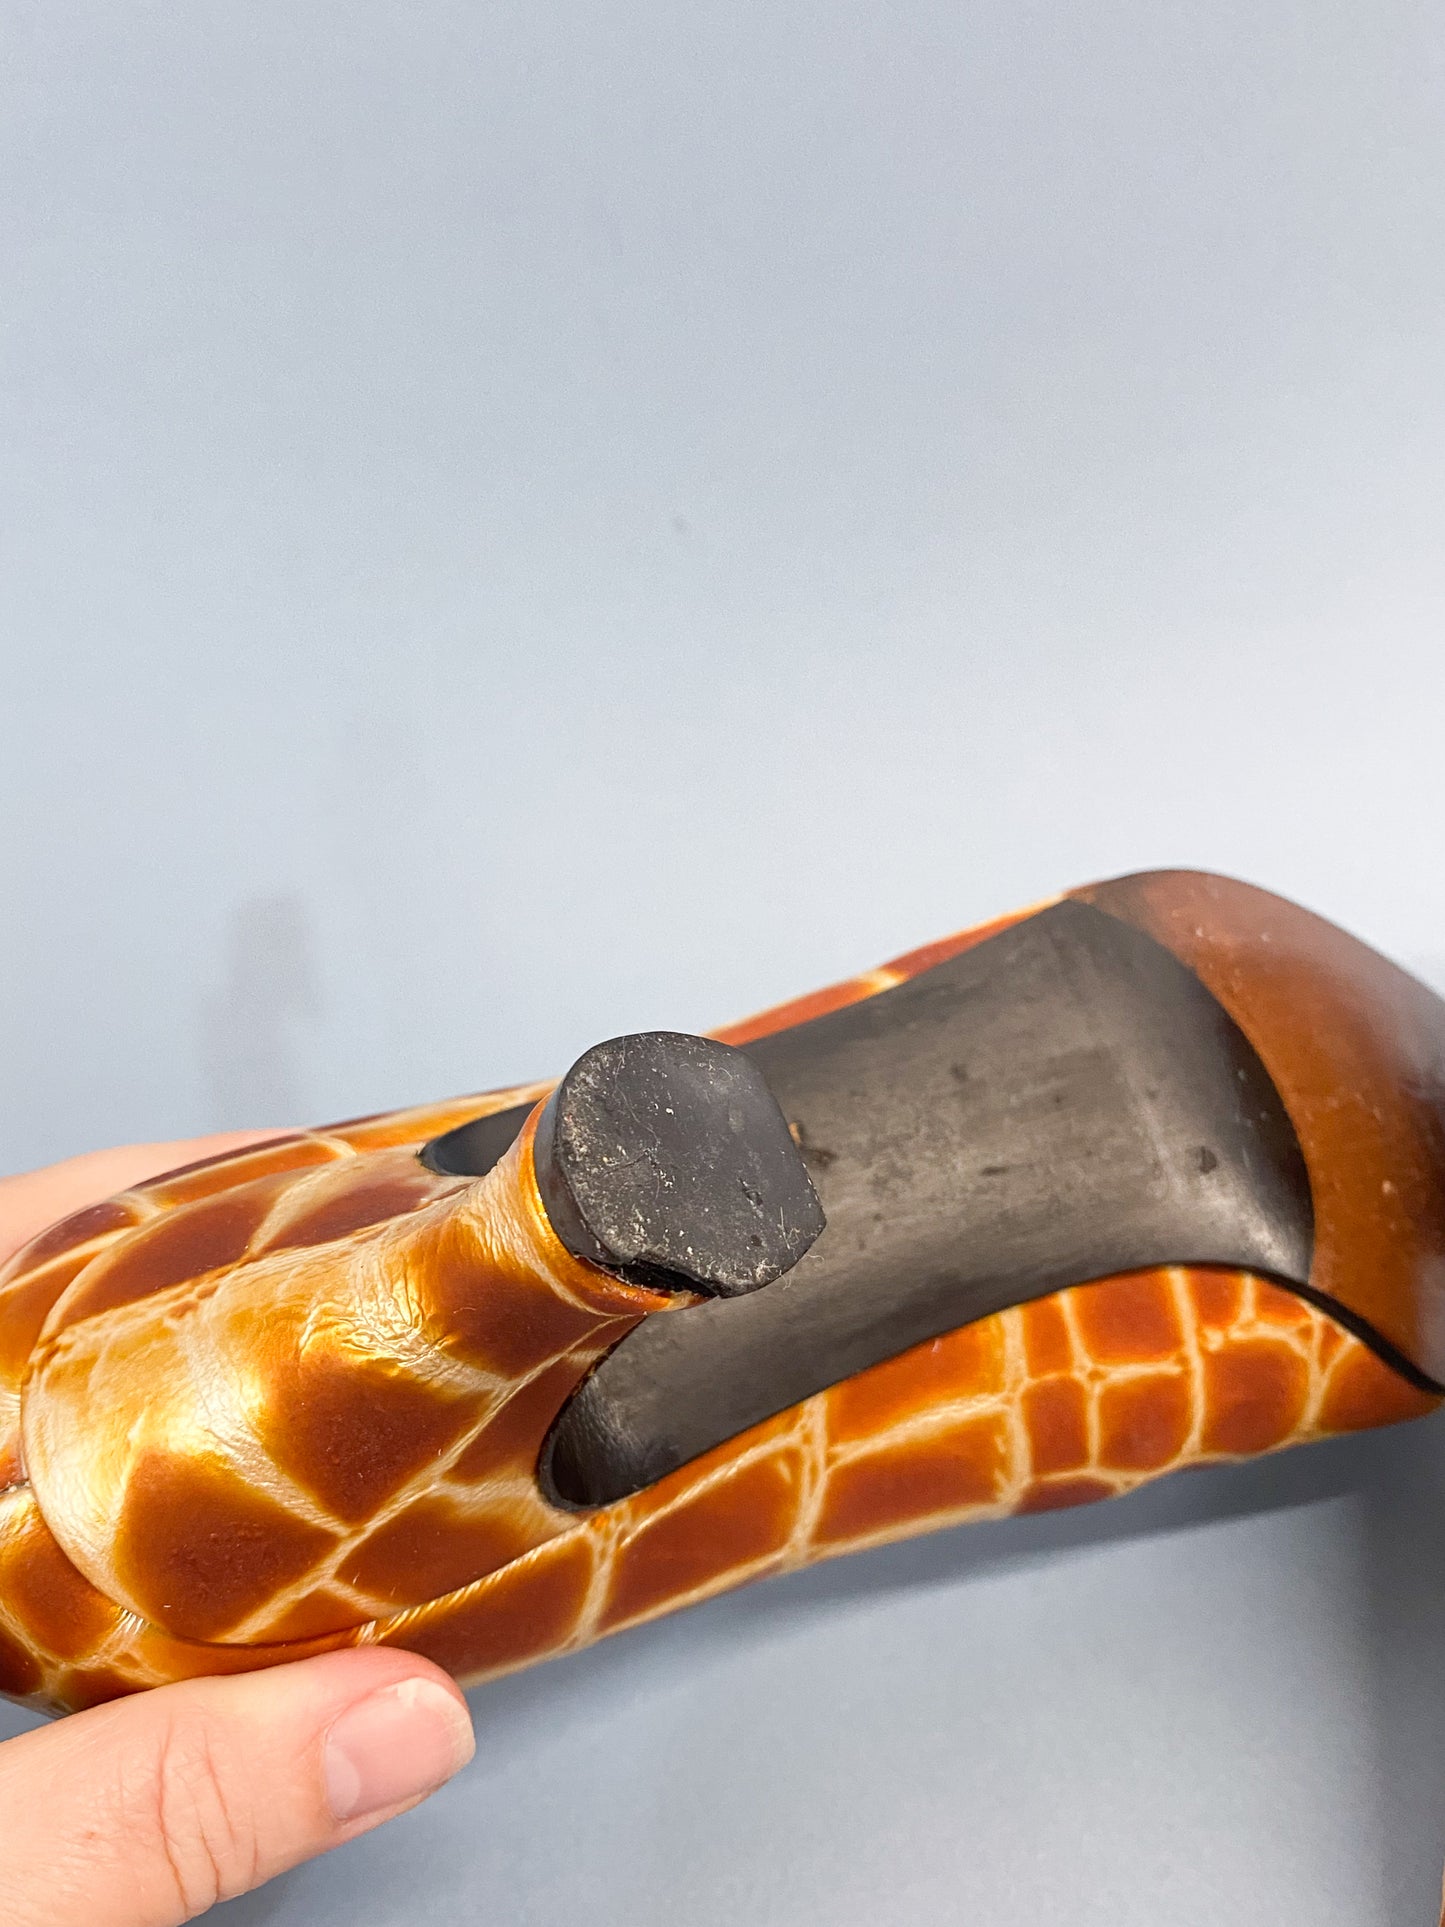 90's Stuart Weitzman Leather Orange Brown Gold Giraffe Heels